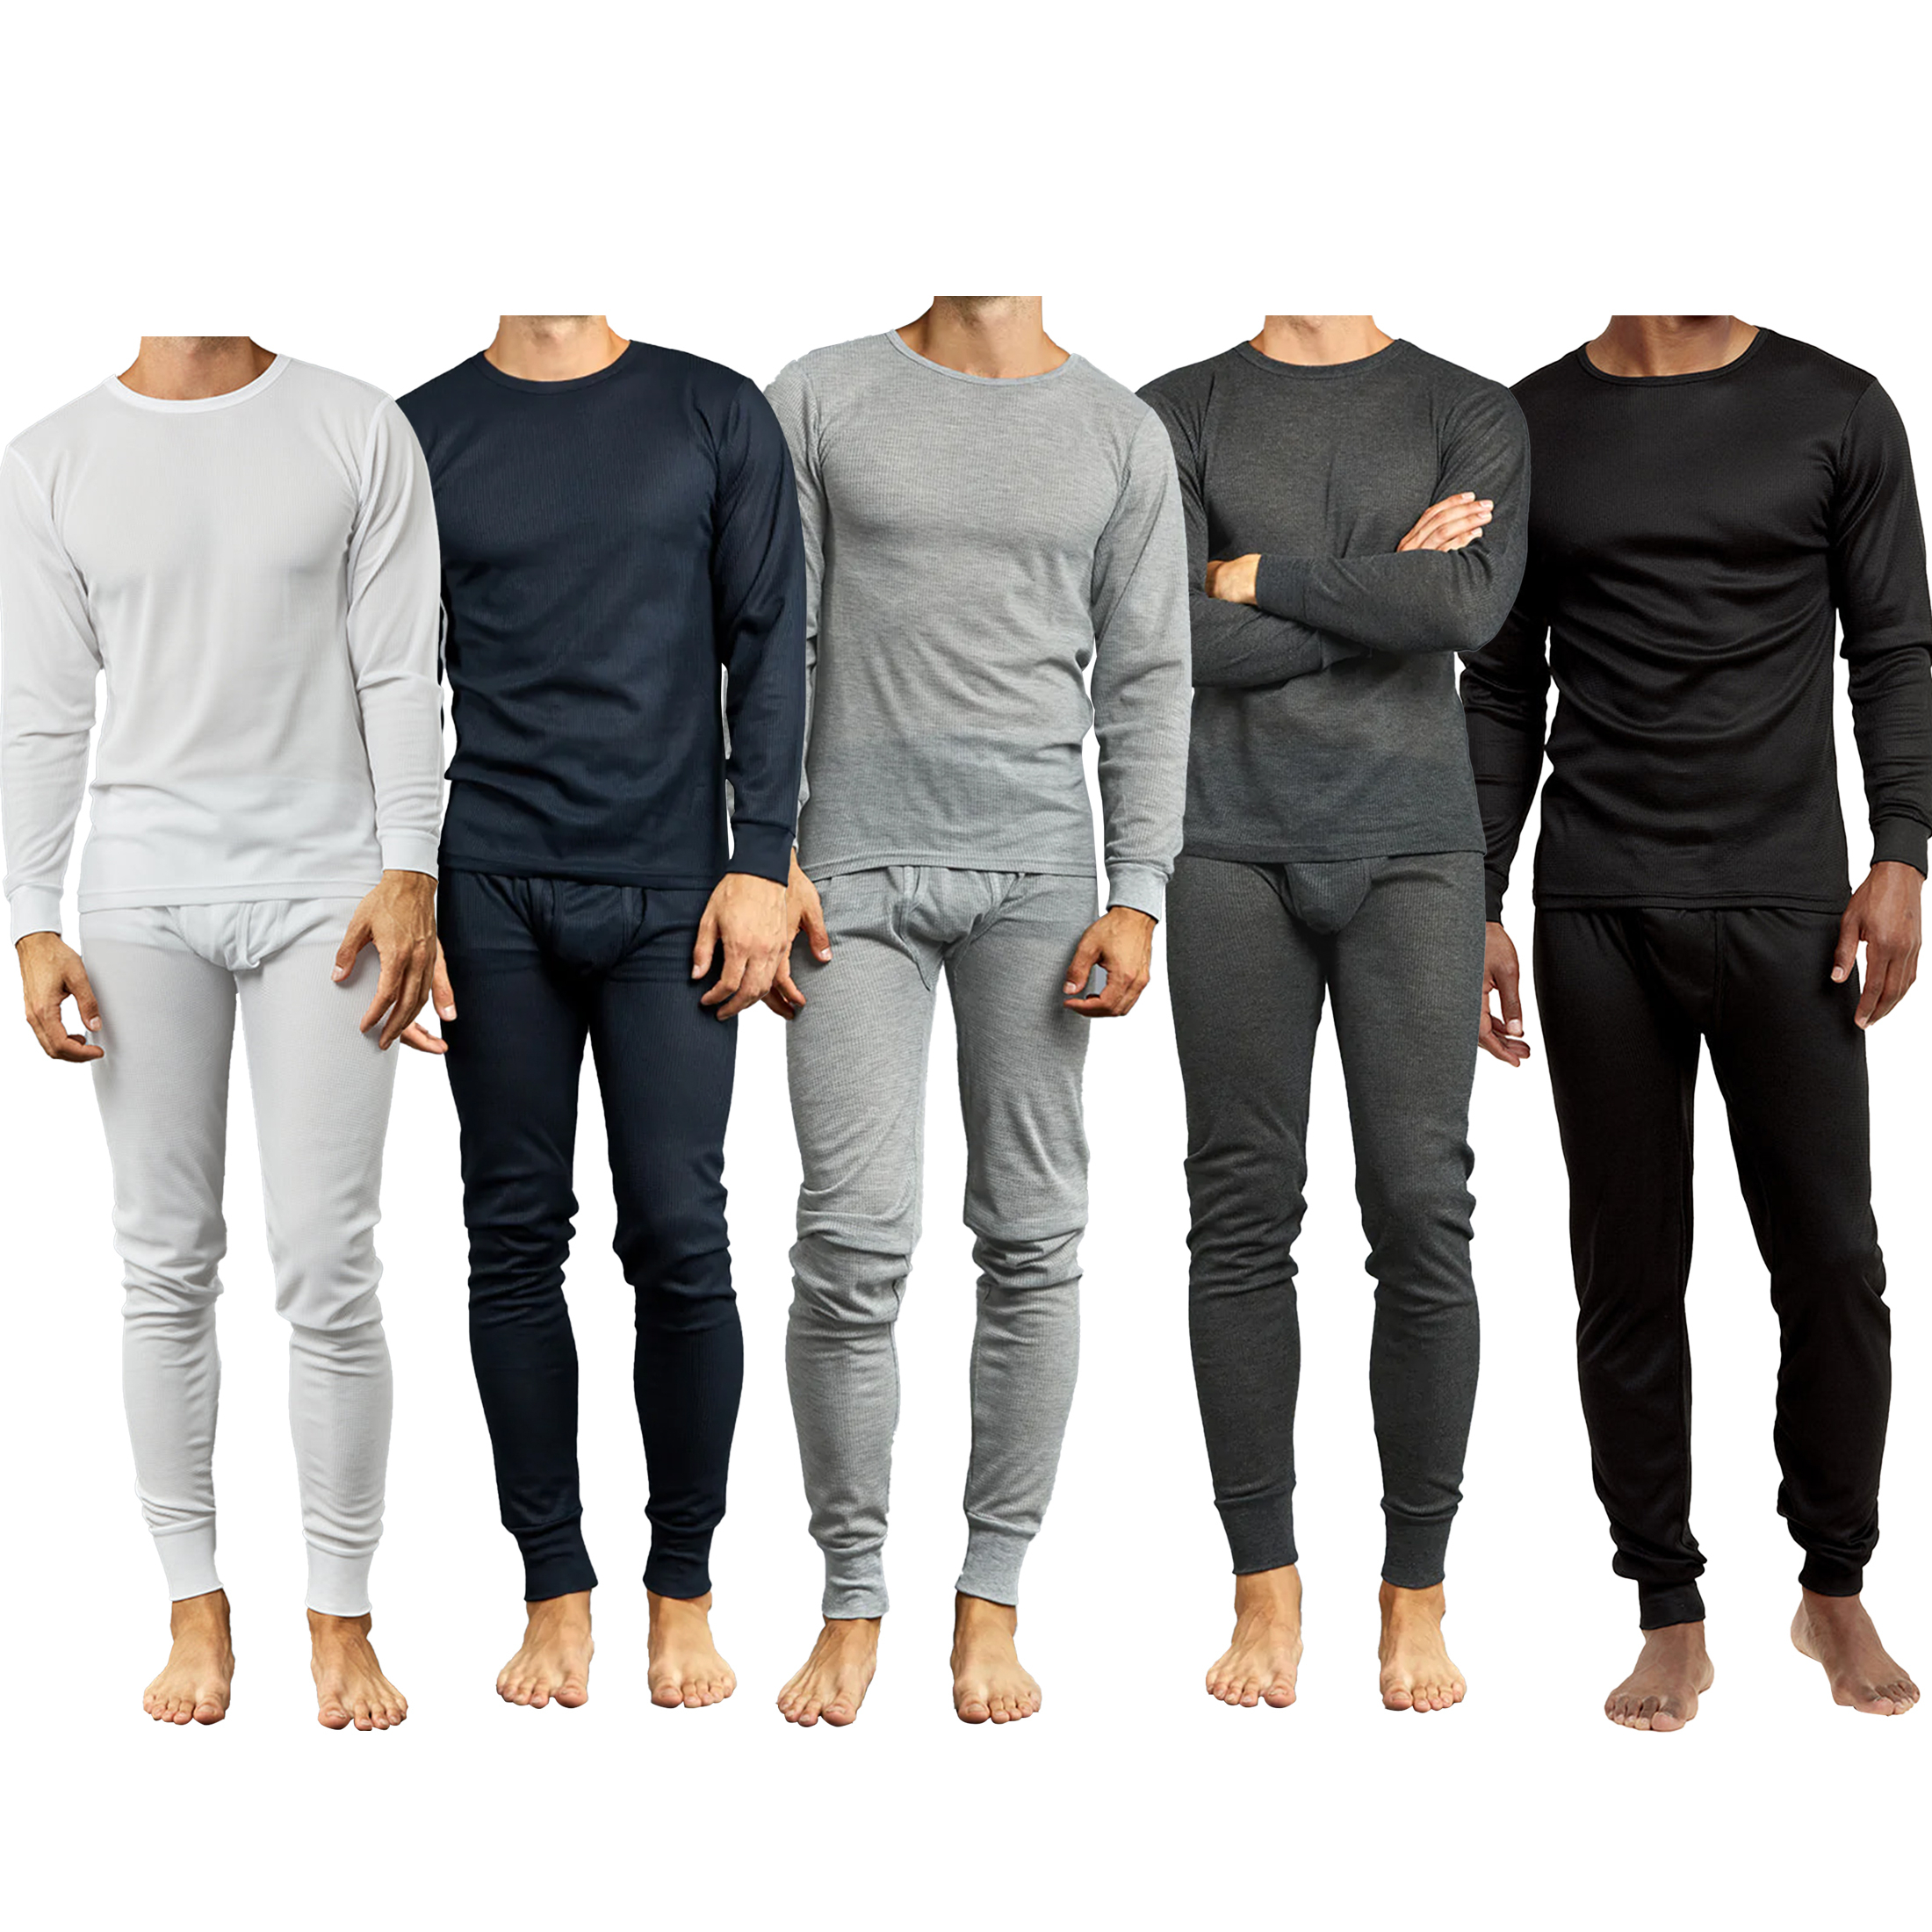 2-Piece: Men's Moisture Wicking Long Johns Base Layer Thermal Underwear Set (Top & Bottom) - Black, X-Large